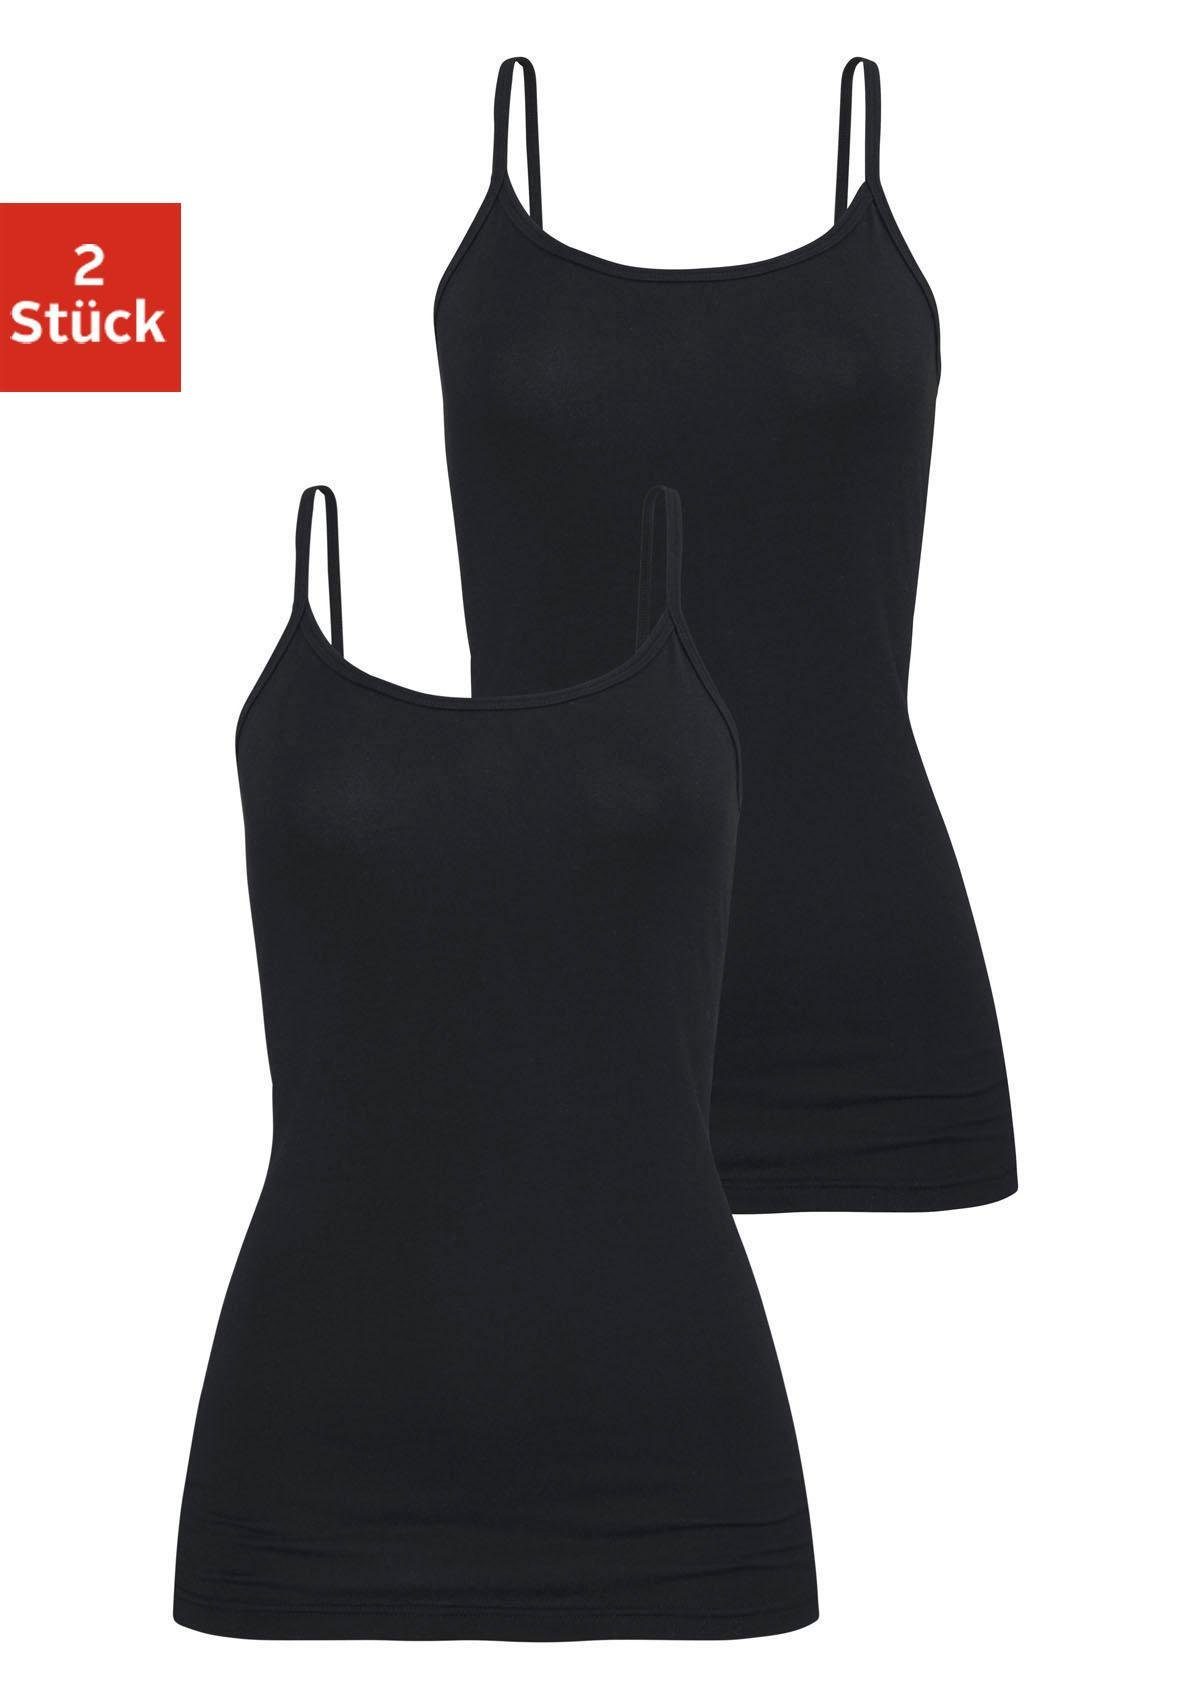 H.I.S Unterhemd (2er-Pack) schwarz aus Spaghettiträger-Top, elastischer Unterziehshirt Baumwoll-Qualität